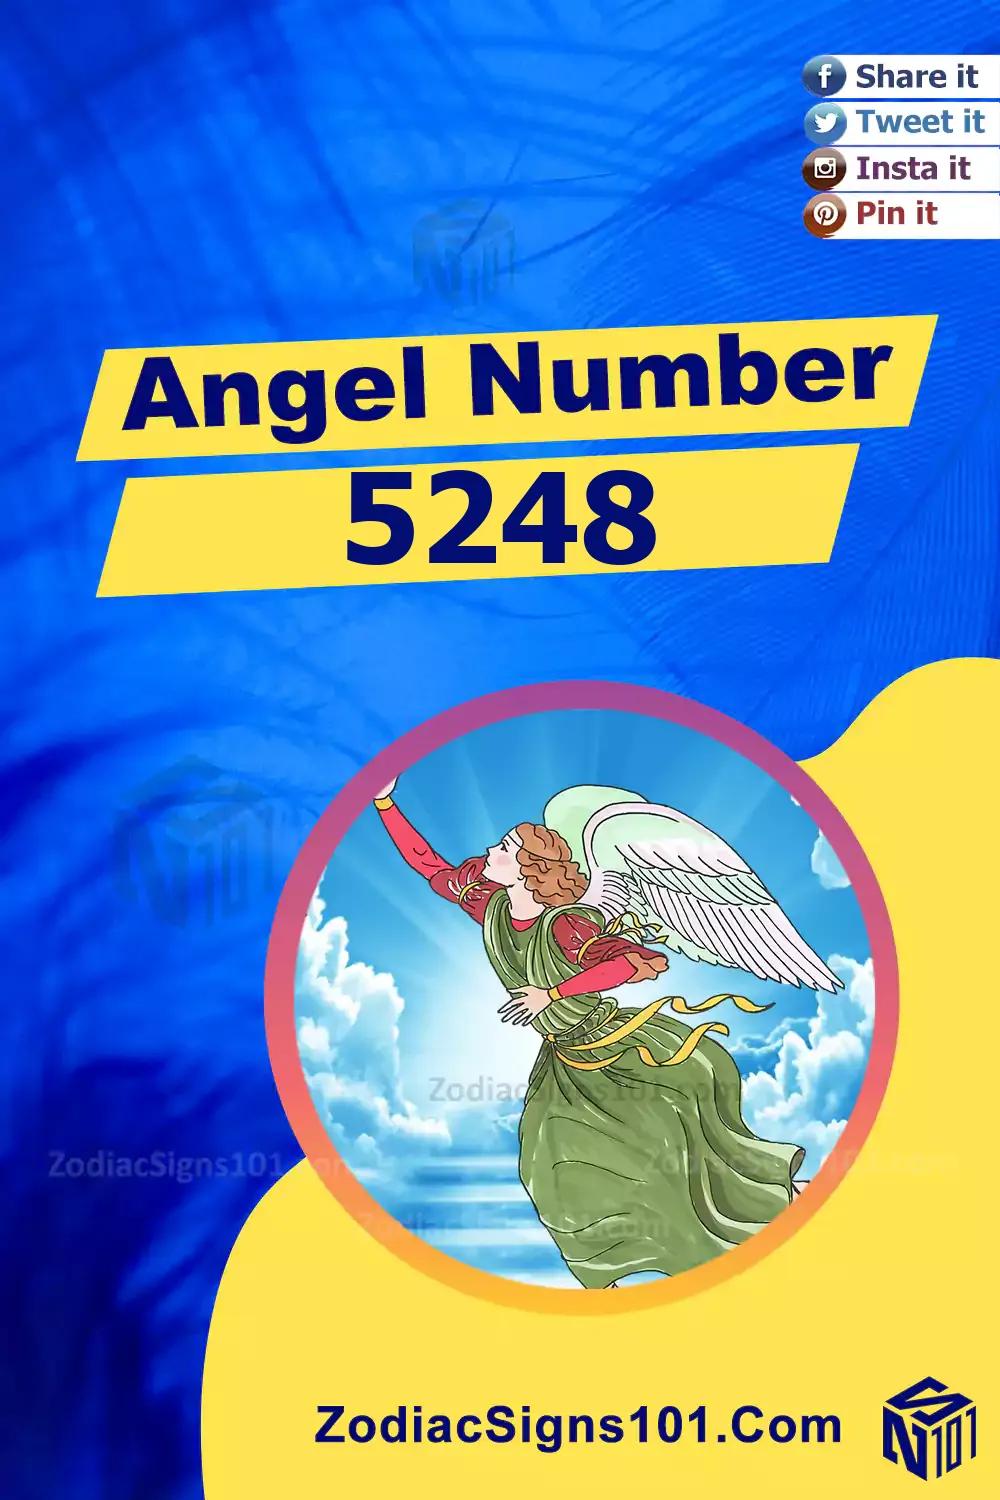 5248-Angel-Number-Meaning.jpg